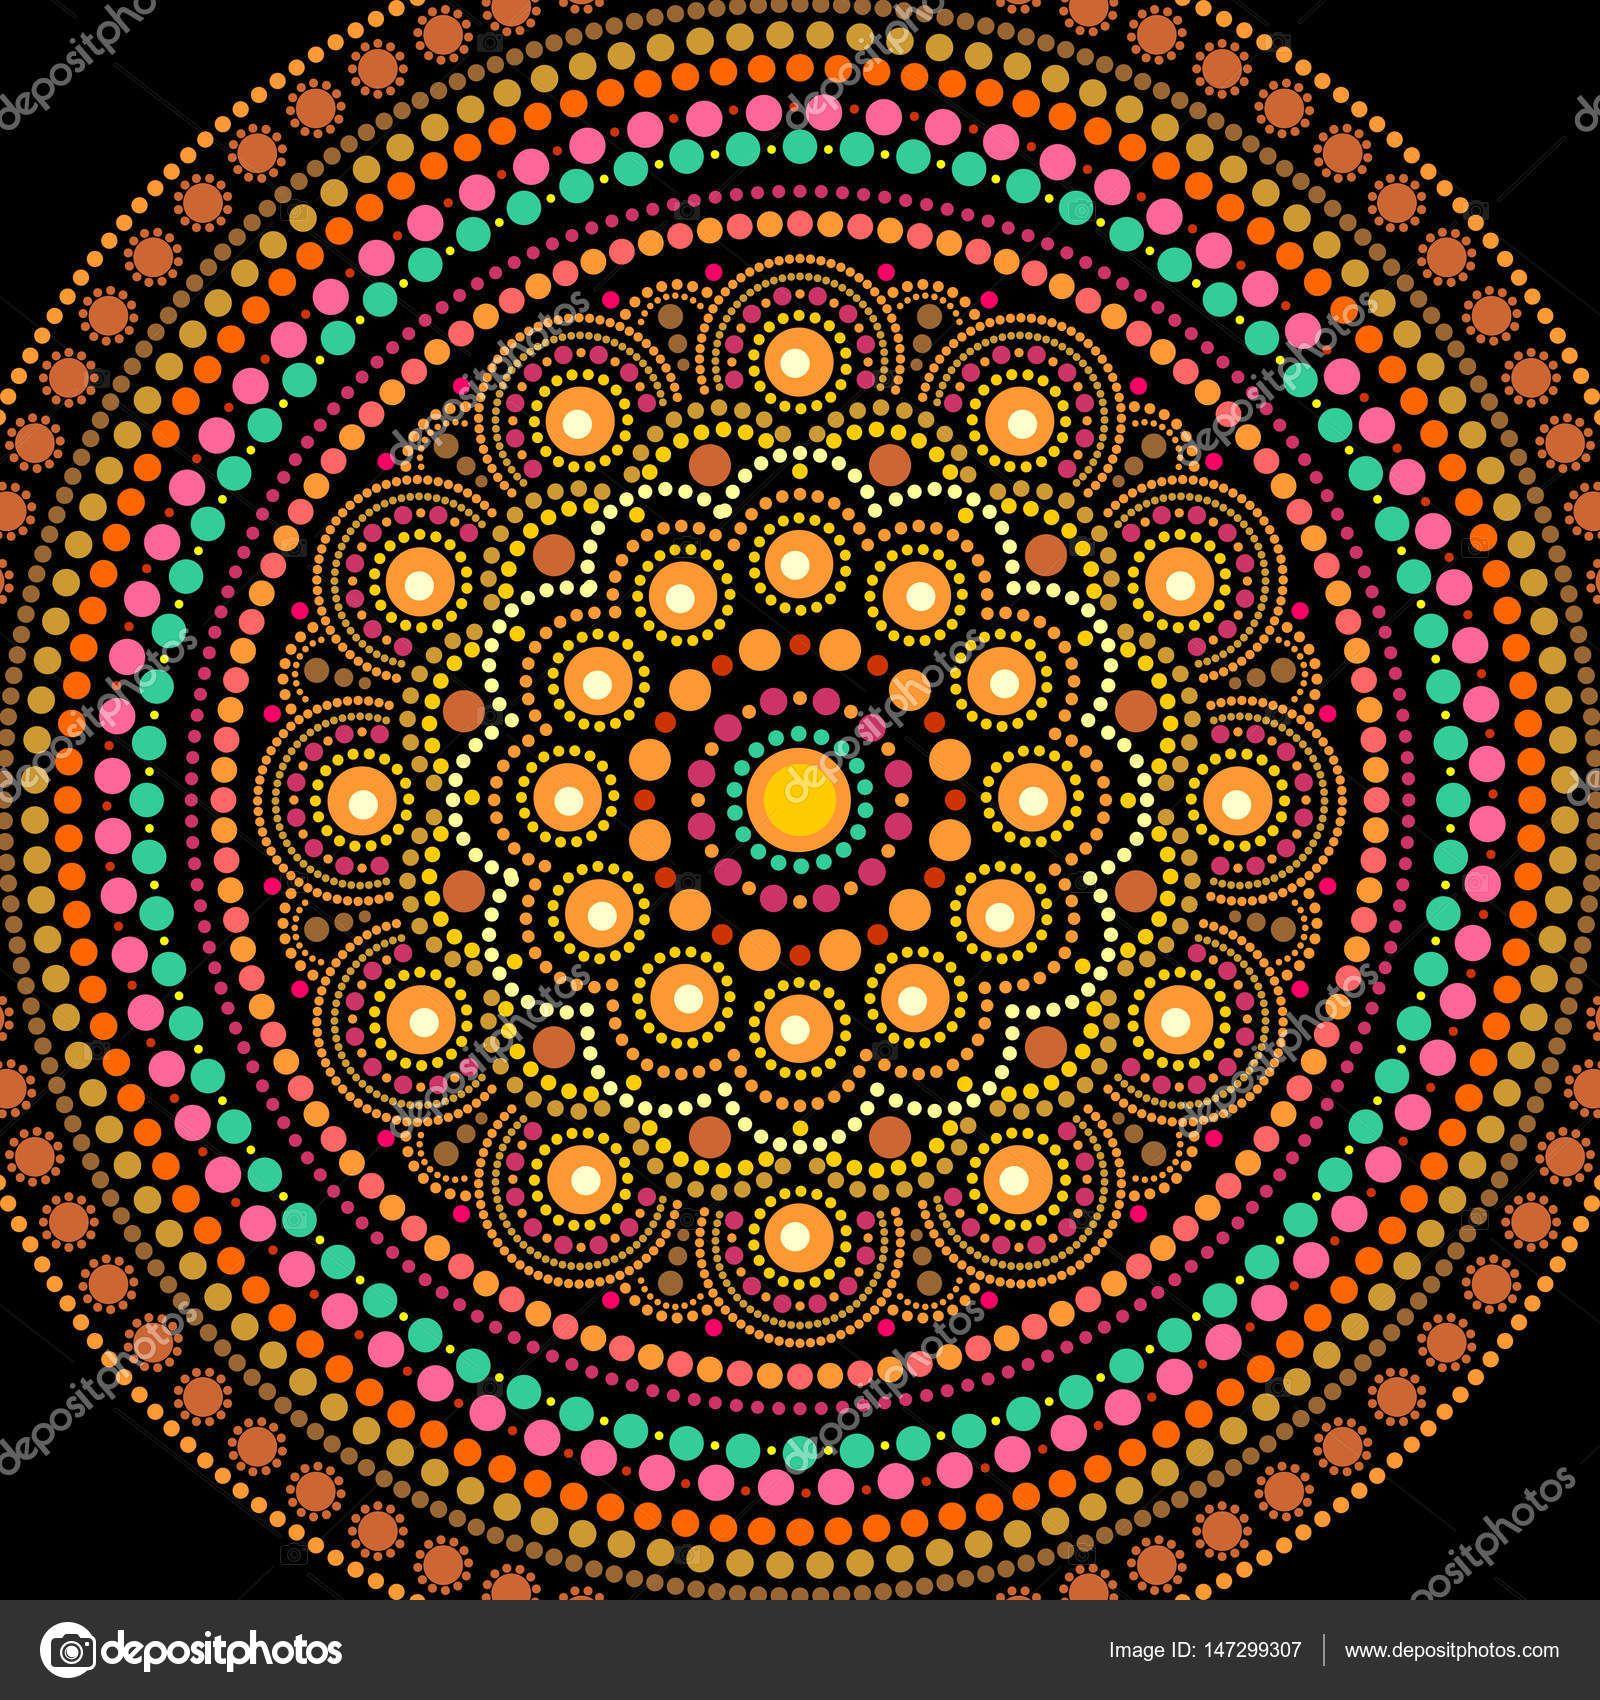 Spiral Dot Orange Circle Logo - Image result for spiral dot mandala | Dot Art | Pinterest | Mandala ...